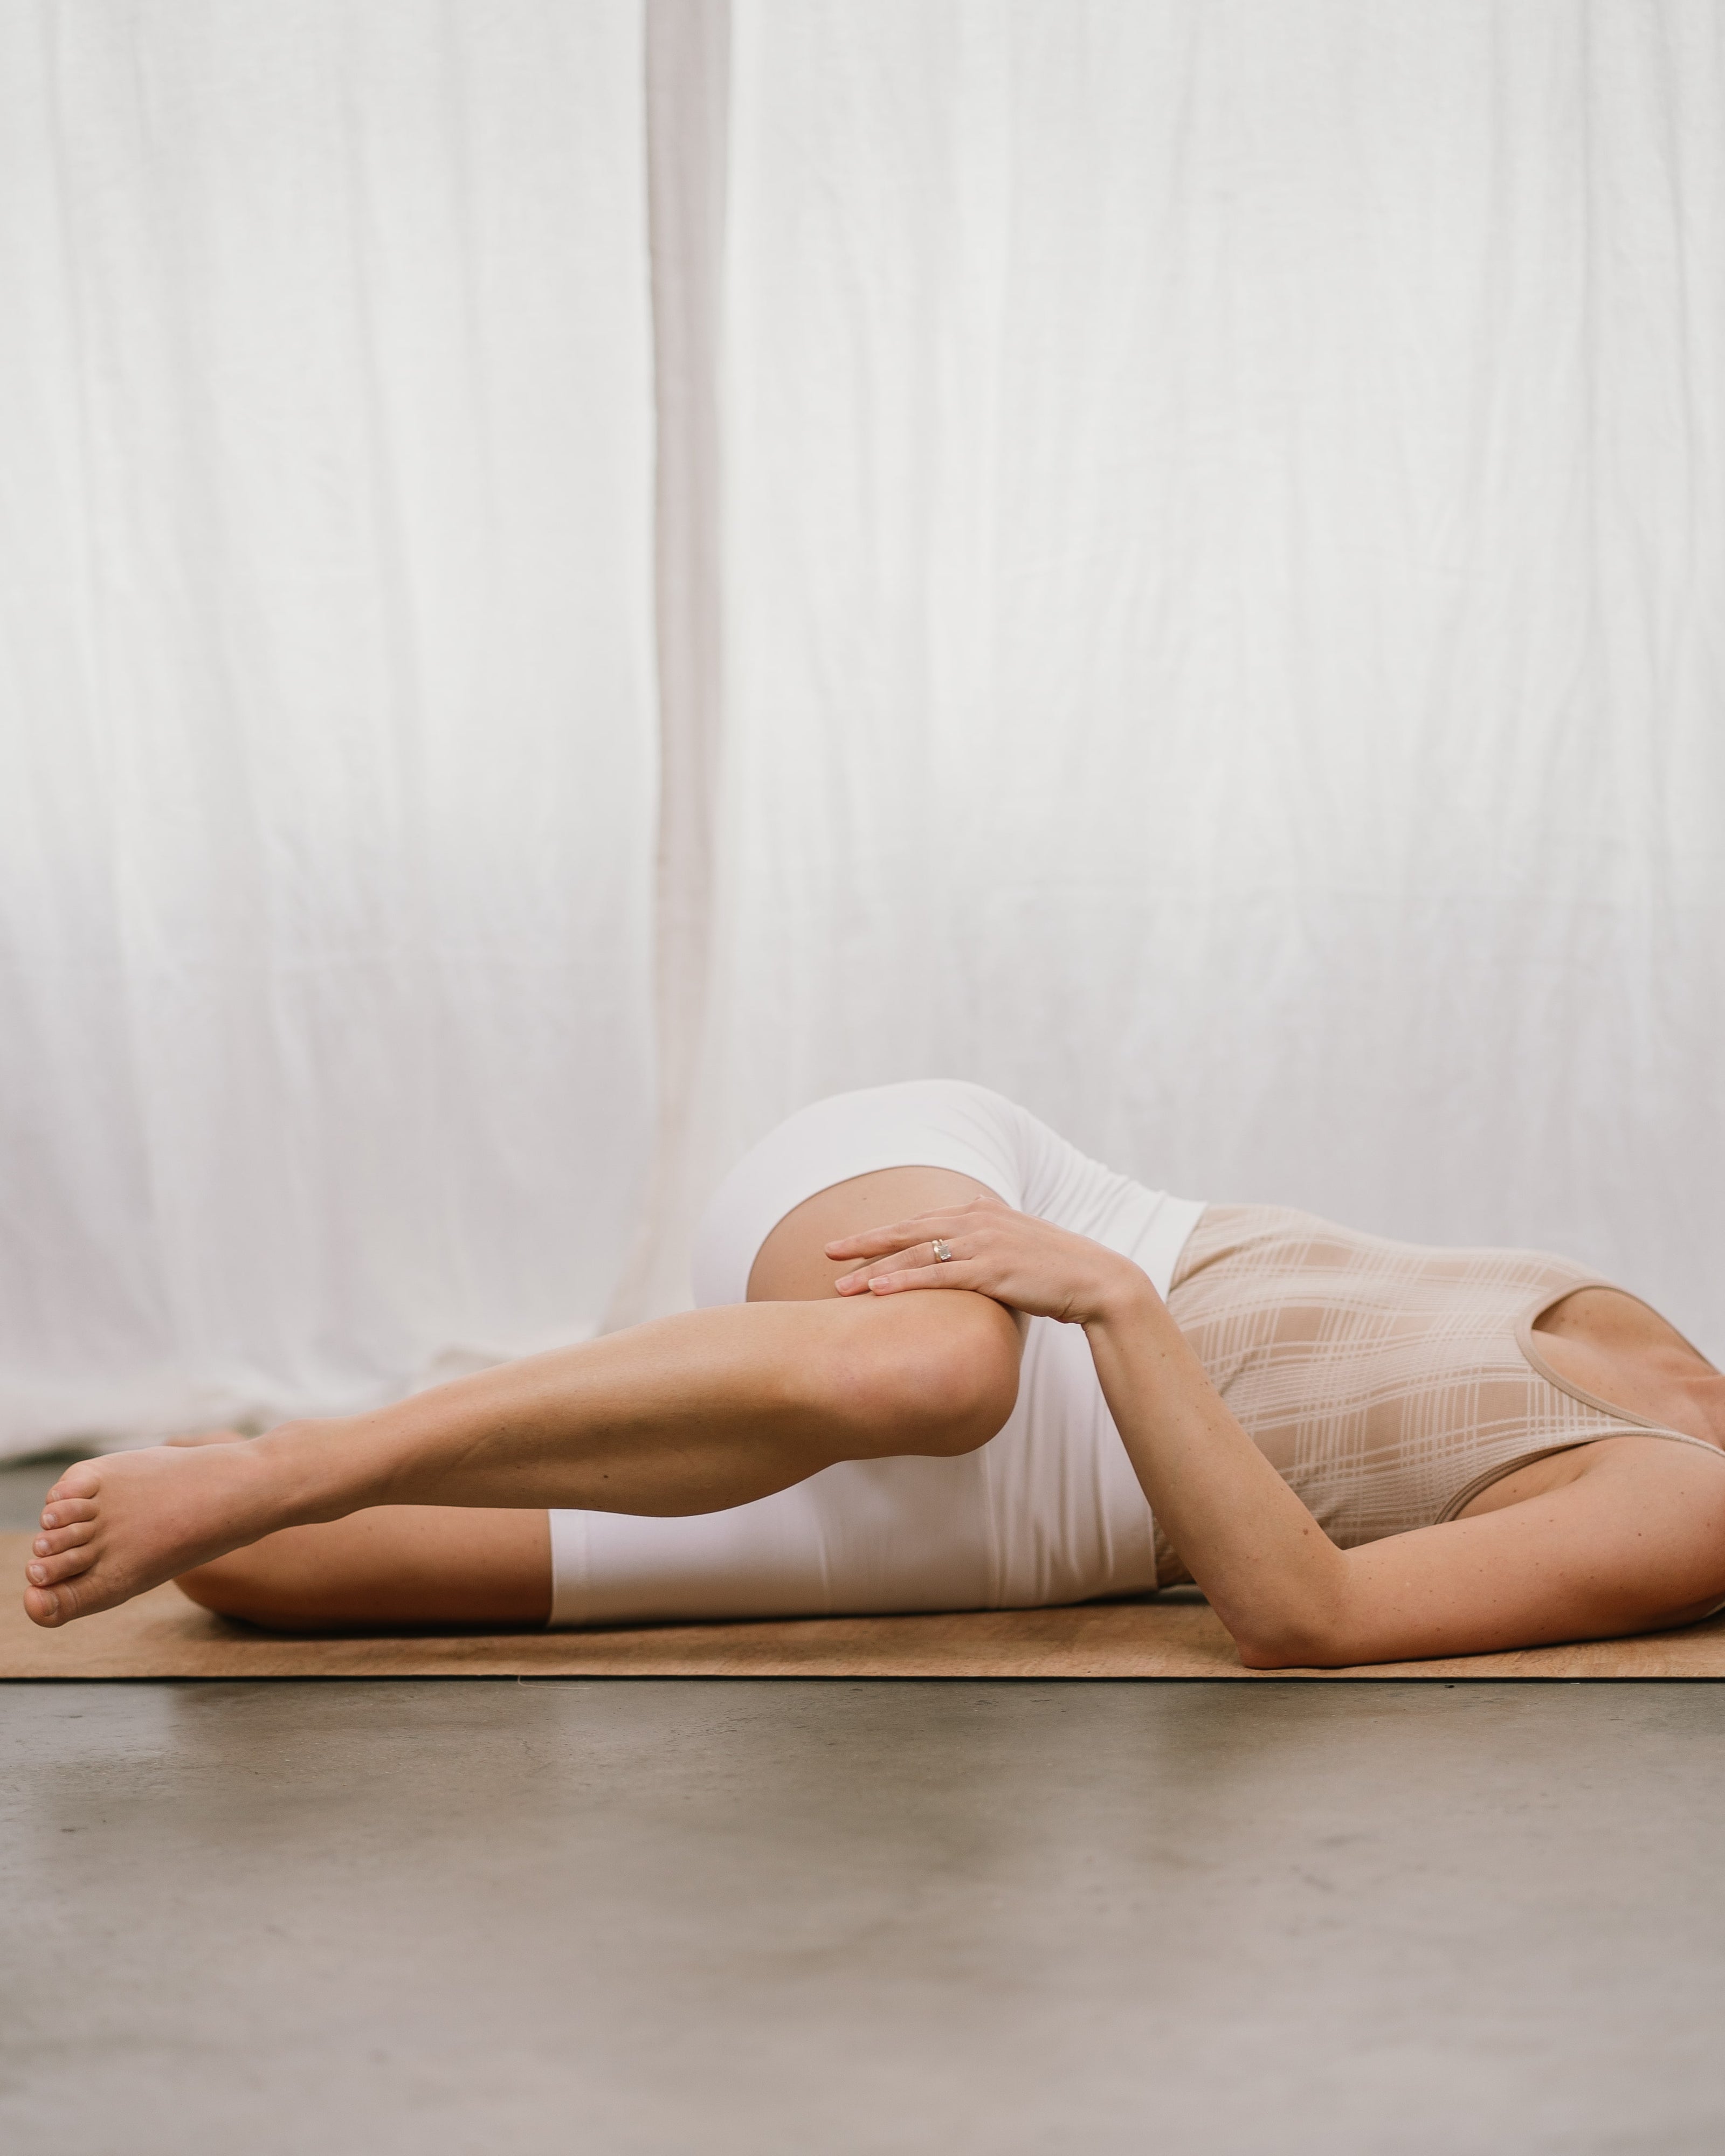 yogi stretching on a noveme cork yoga mat